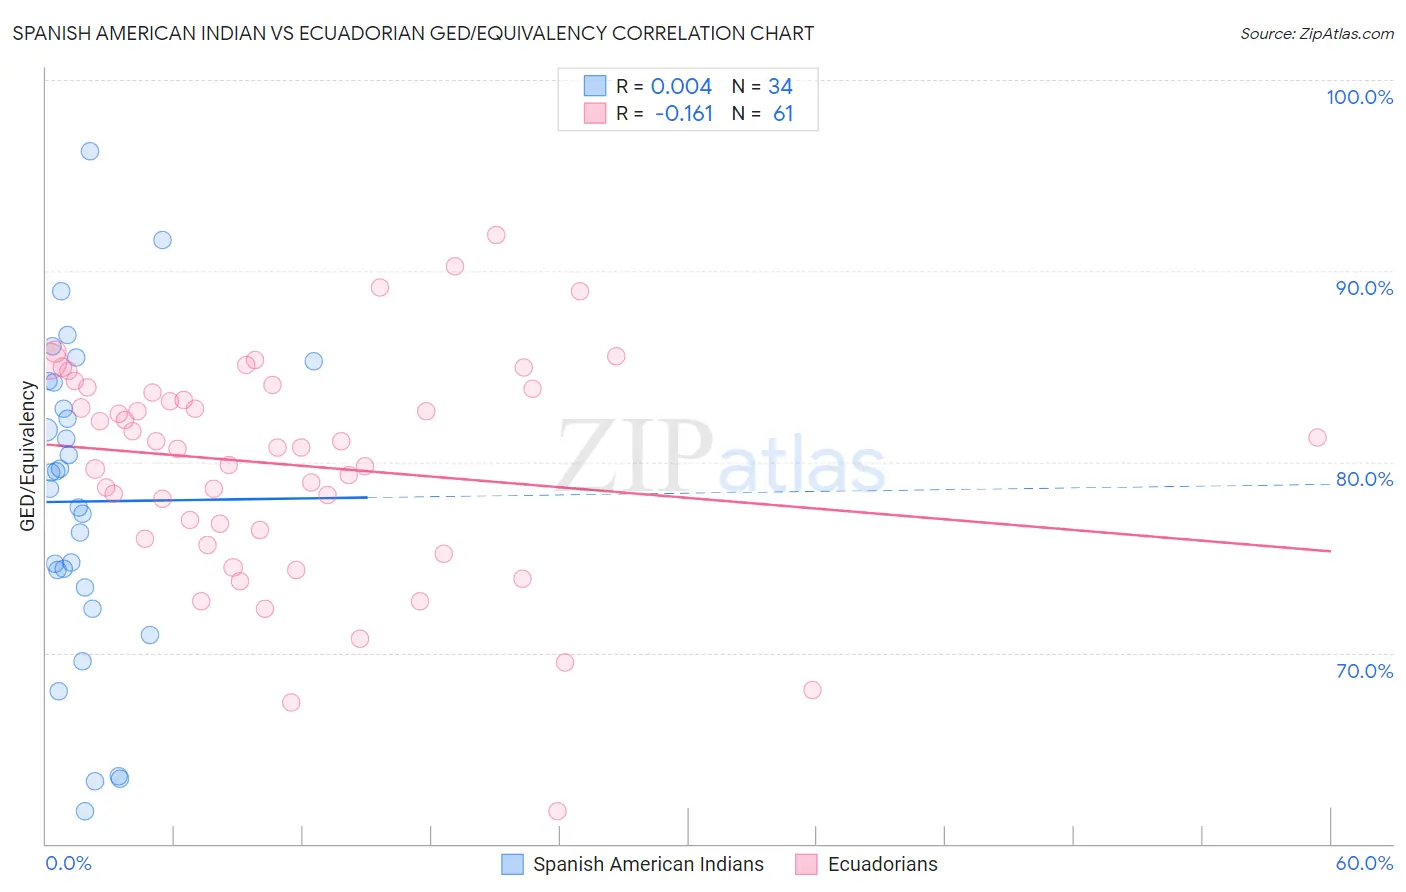 Spanish American Indian vs Ecuadorian GED/Equivalency